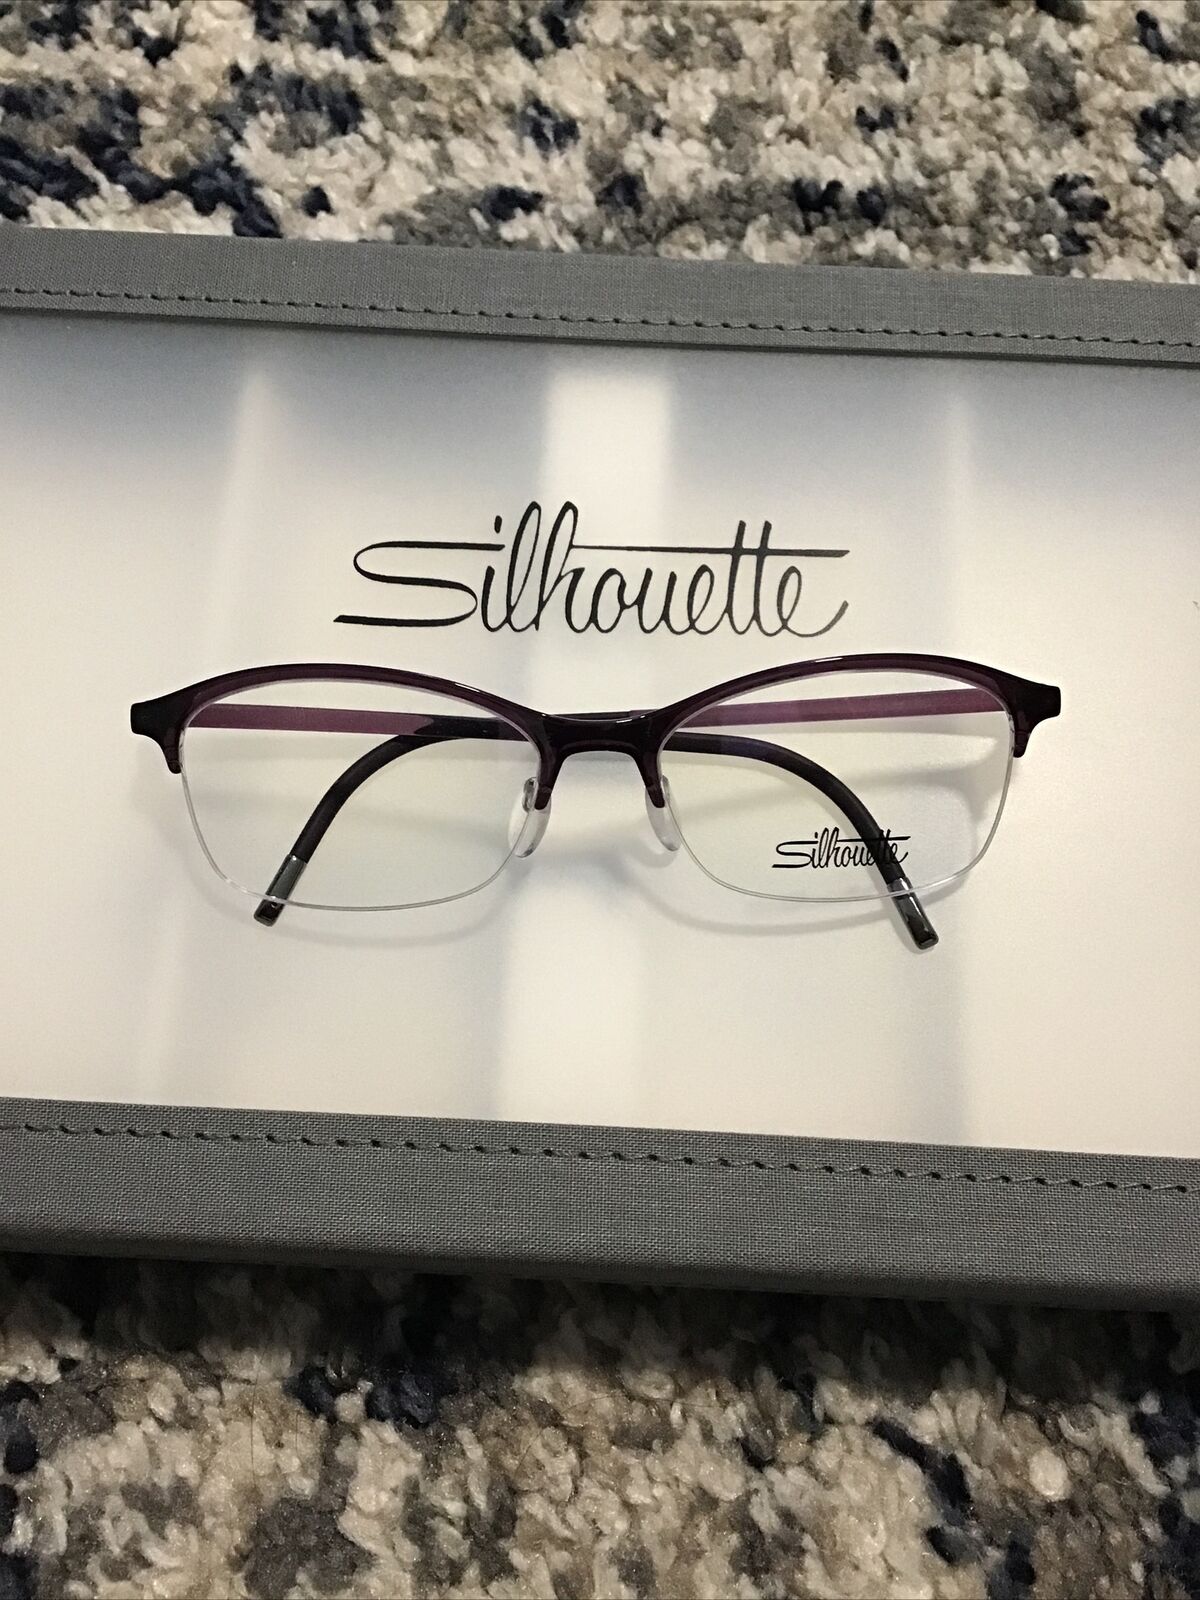 New Silhouette Eyeglass Frames SPX Illusion Nylor 1585 4010 Plum Size 51